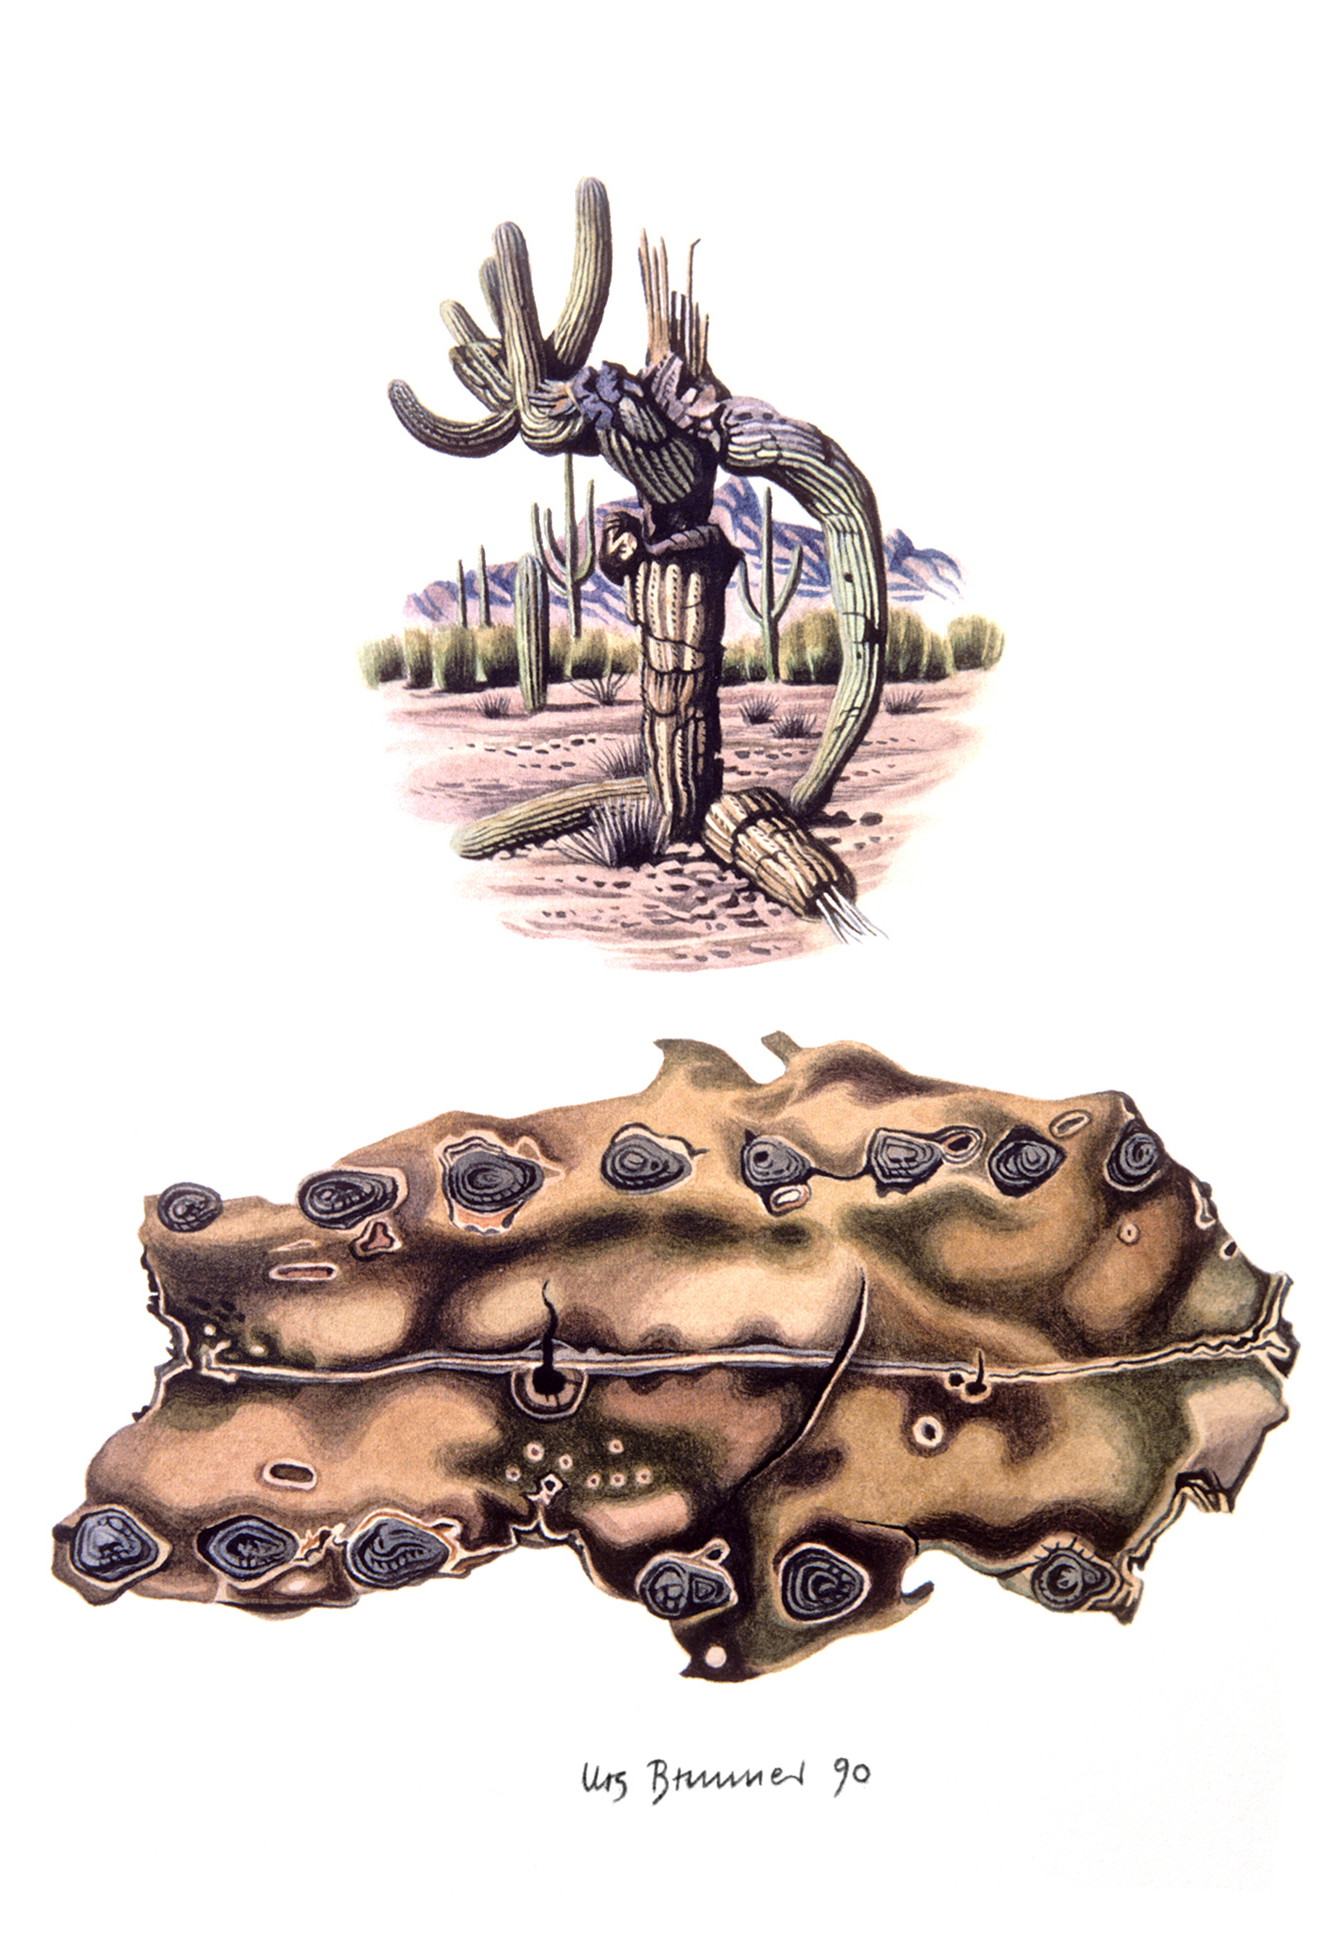 Fundstücke / Saguaro-Rinde, 1990, Aquarell auf Papier, 24 x 18 cm